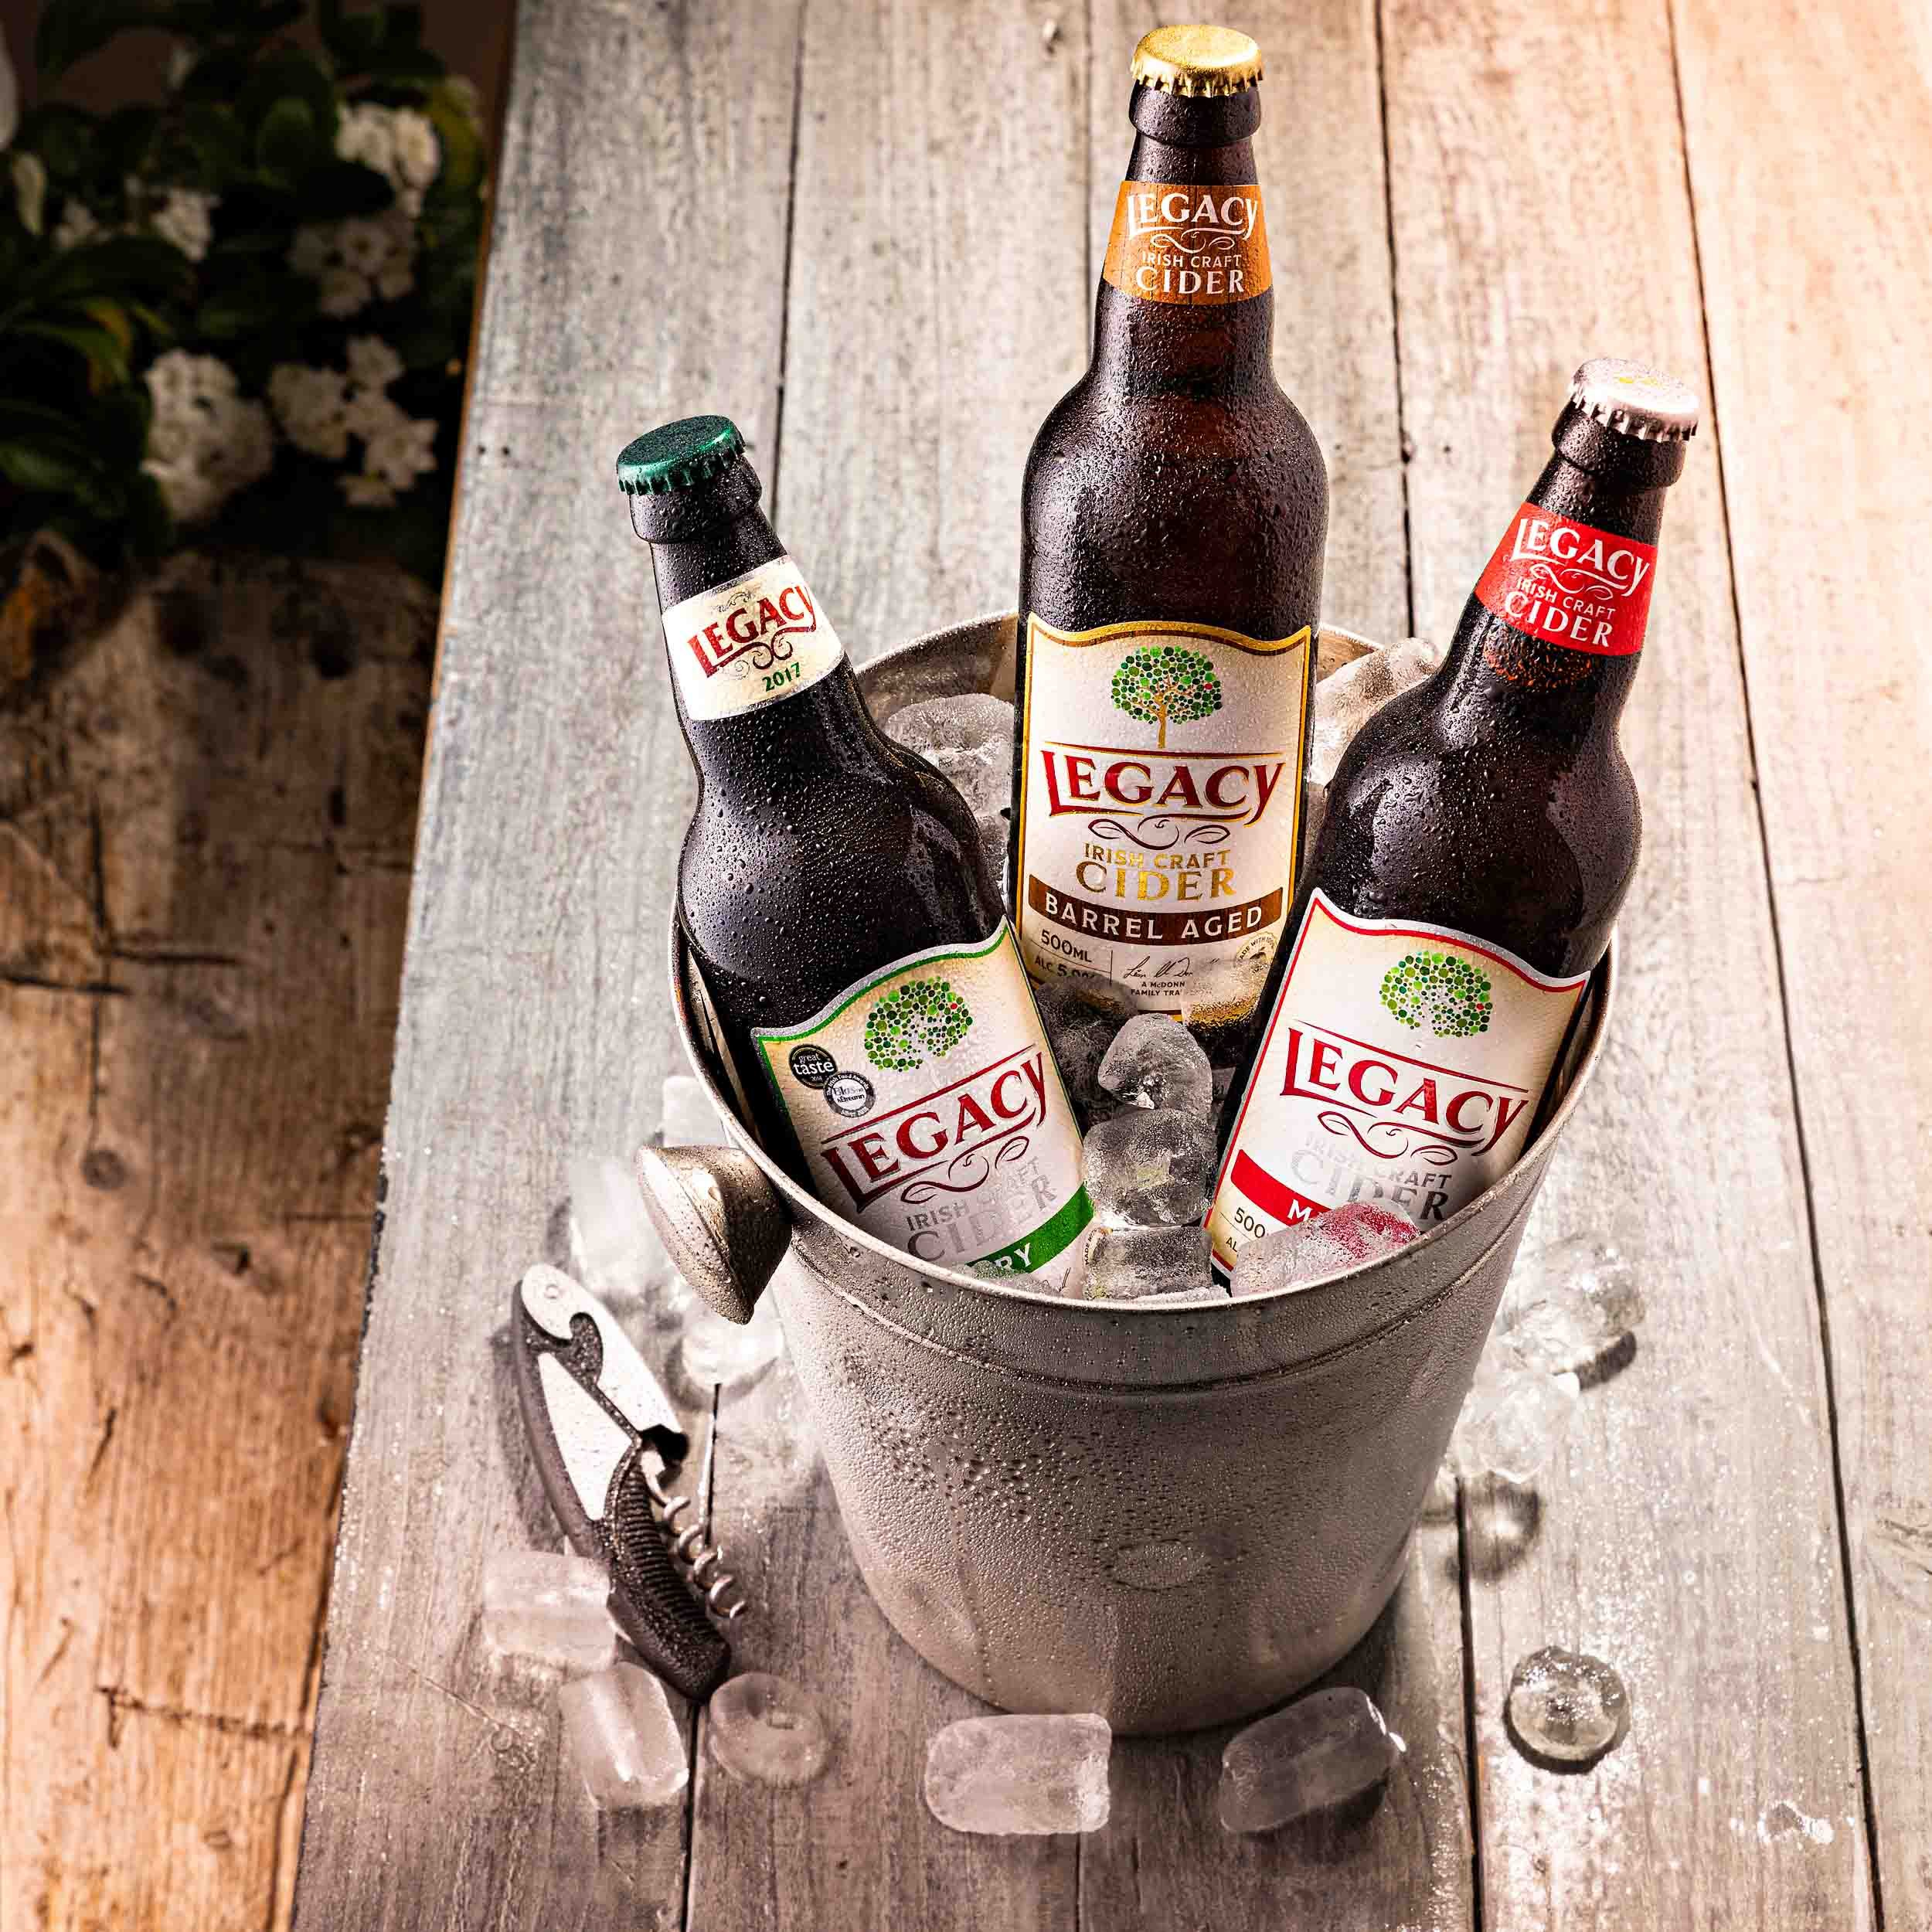 Legacy Irish Cider Bottles | Commercial Product Shot (Copy)